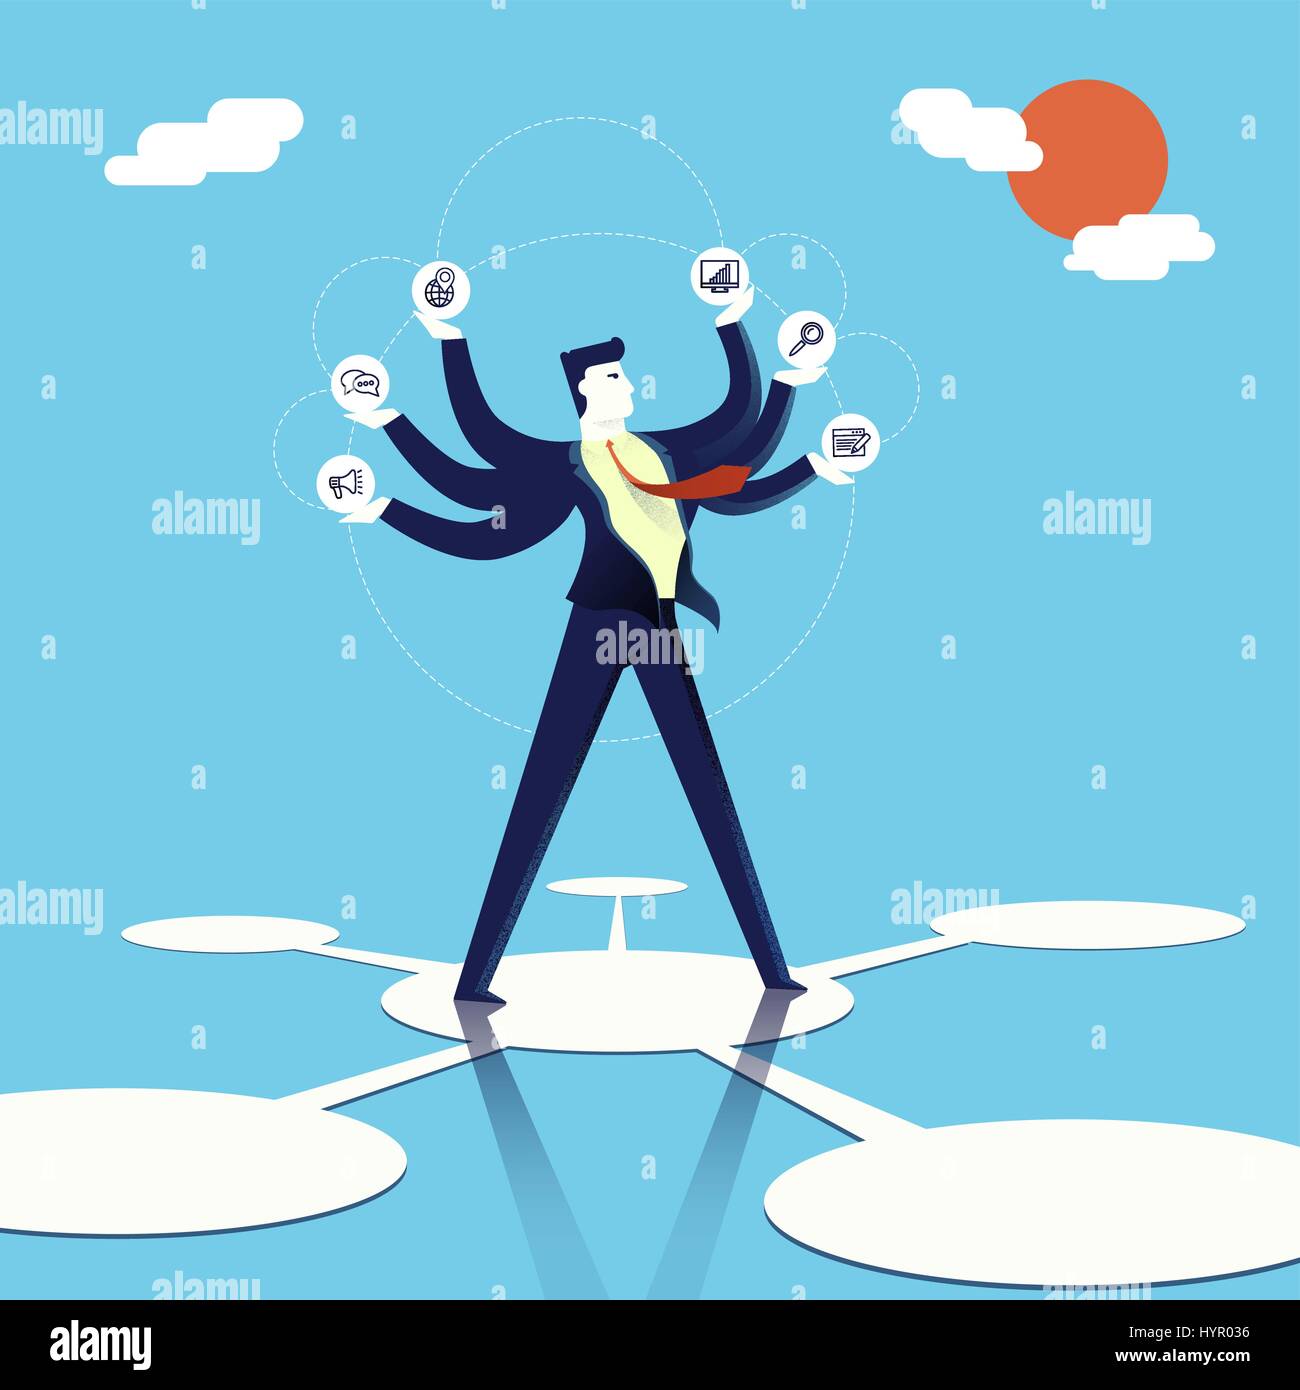 Business multitasking concept illustration, executive entrepreneur man juggling multiple work skills and ways to take. Modern flat art design for mult Stock Vector